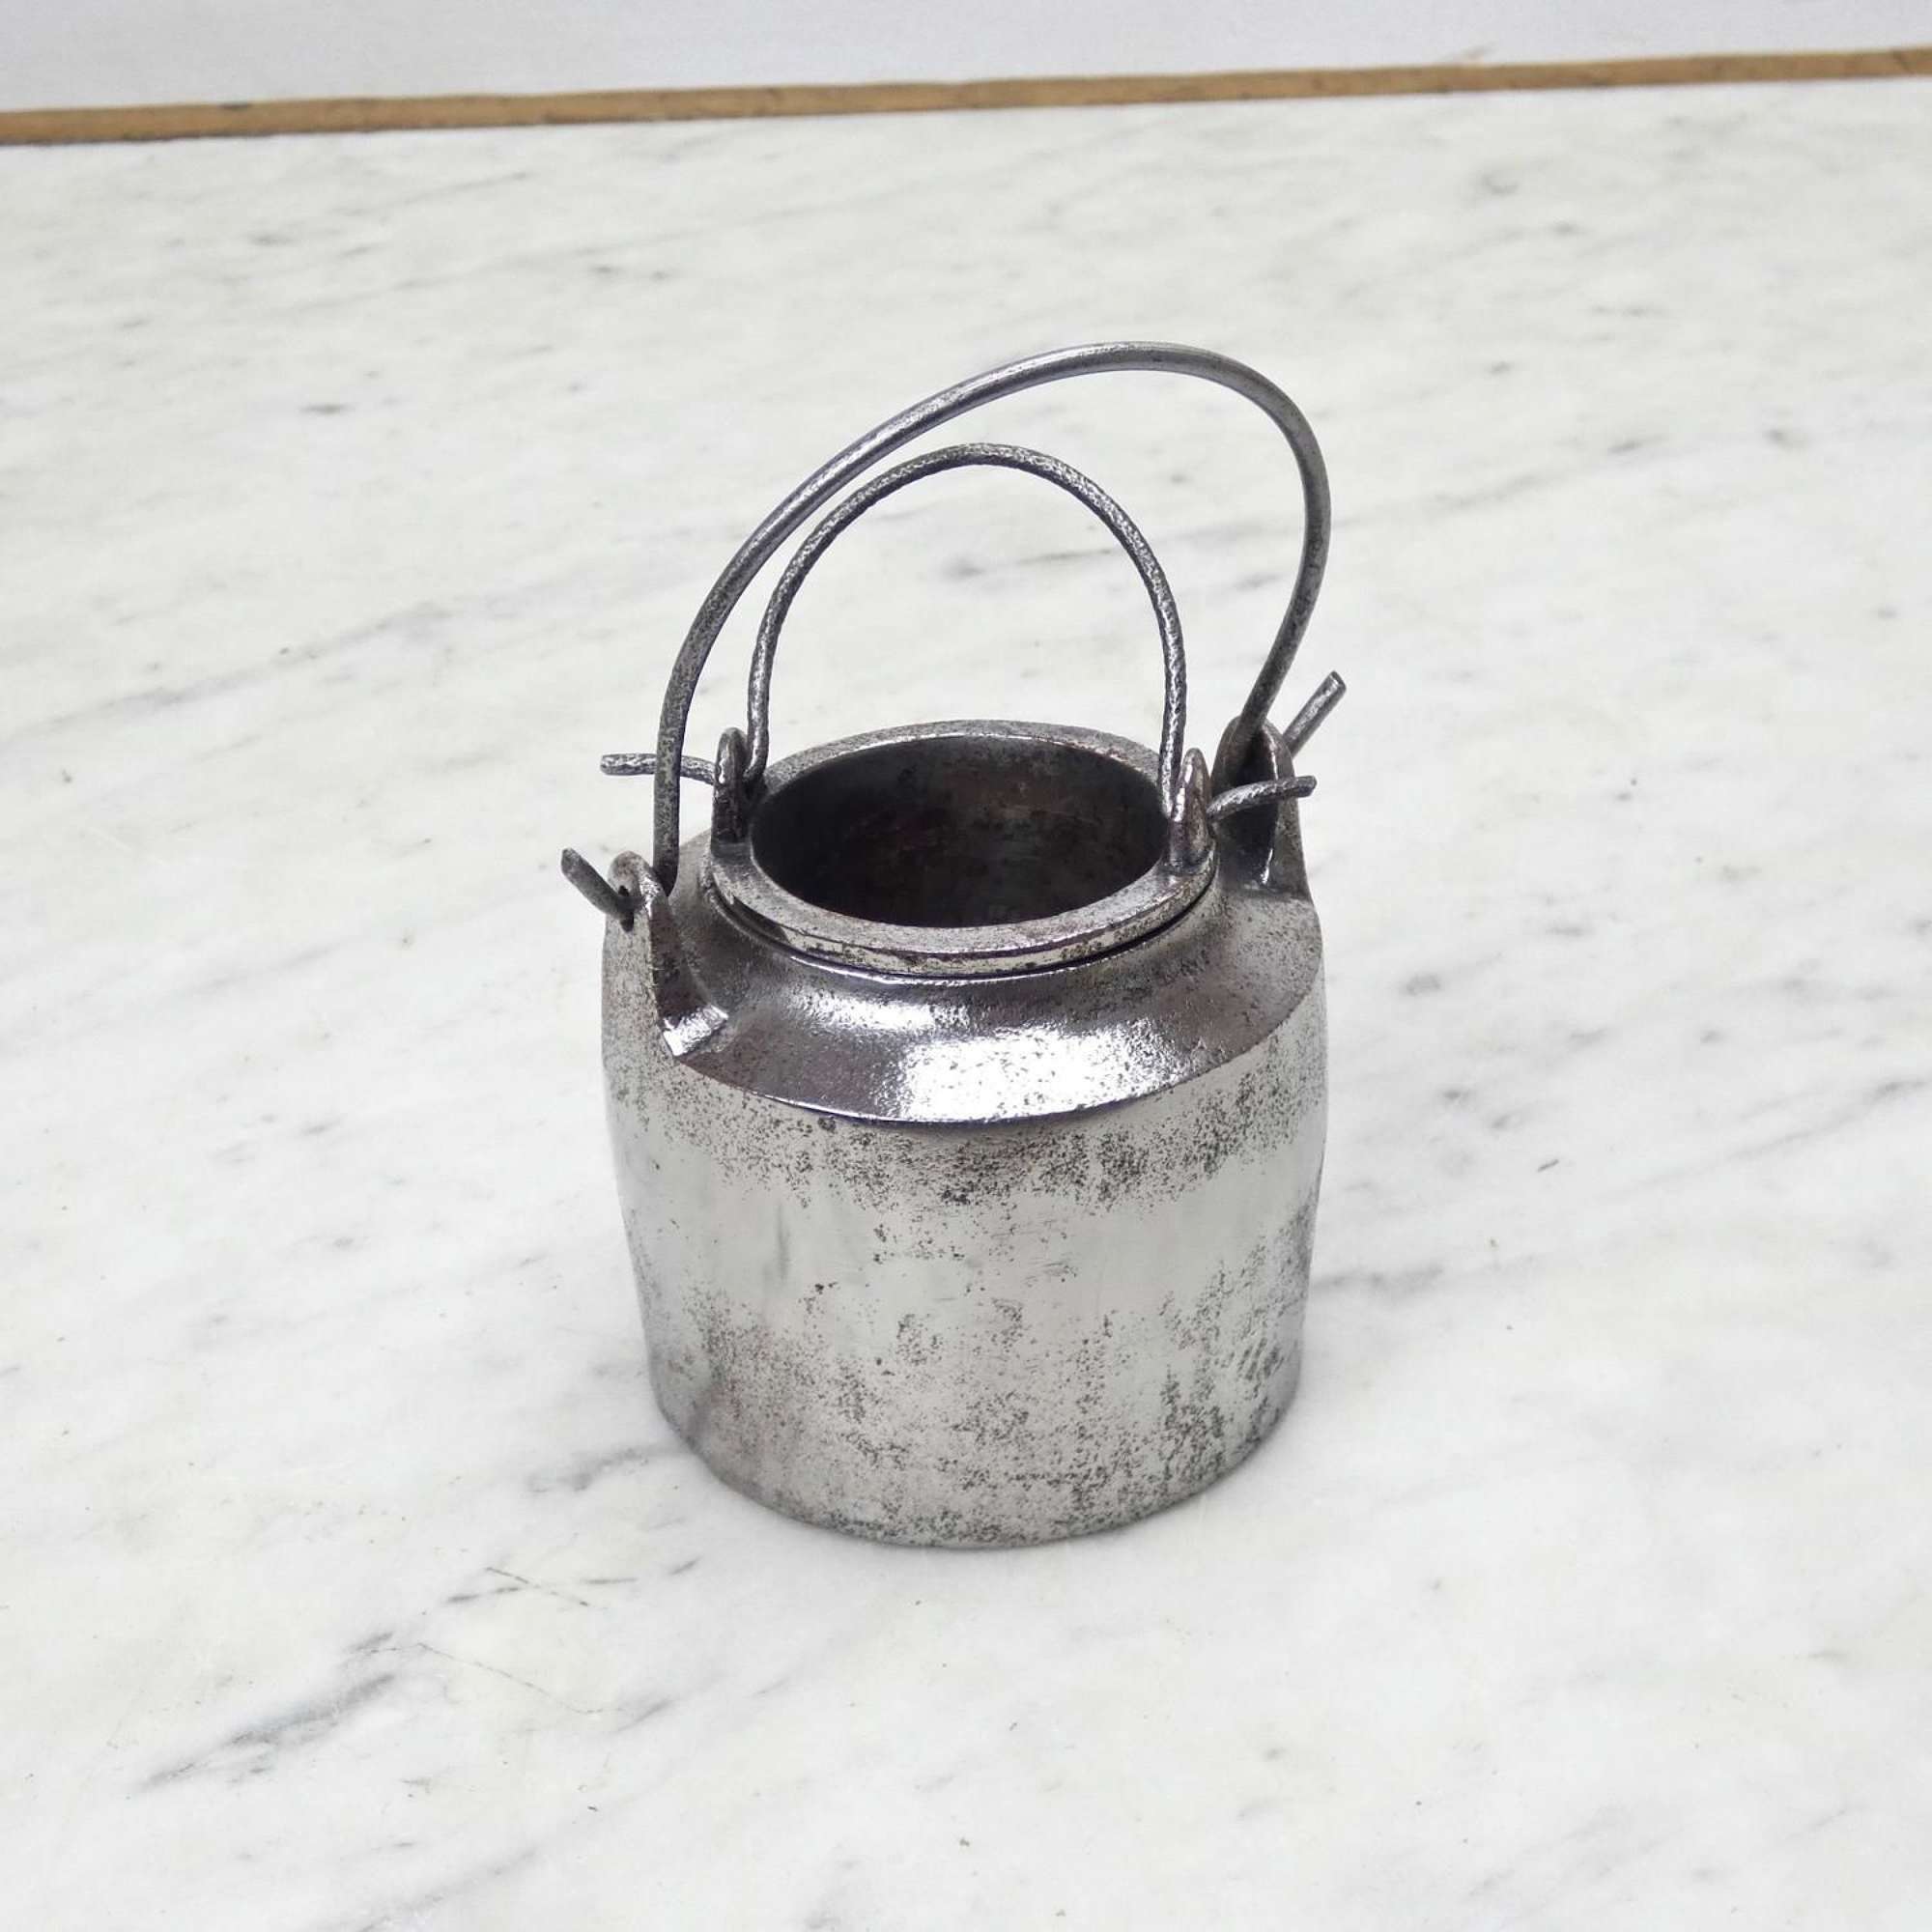 Very small, cast iron glue pot